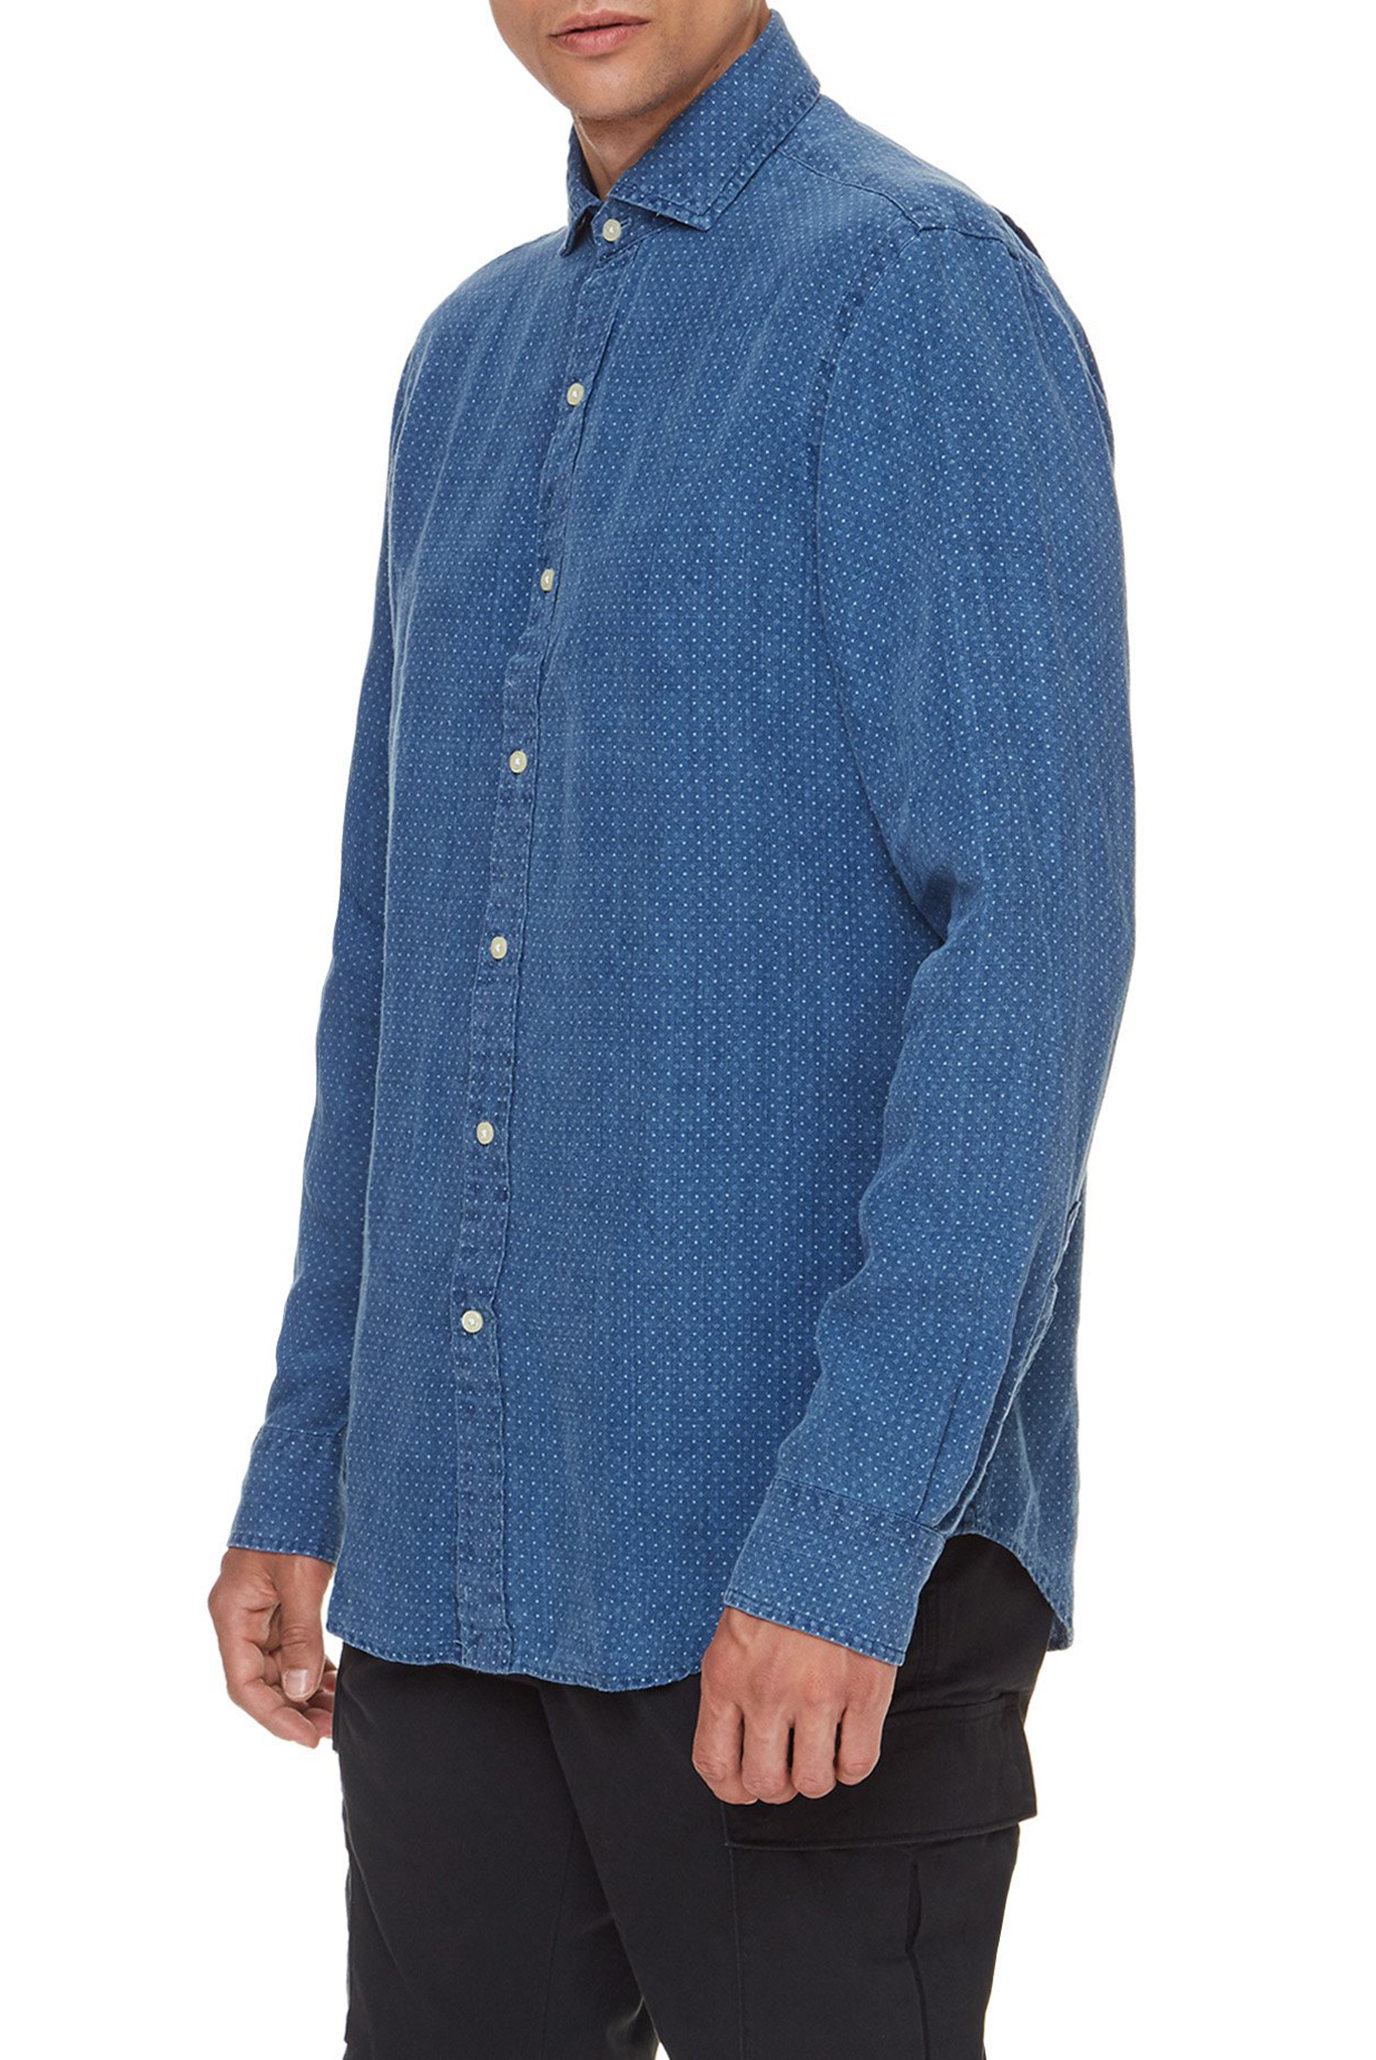 Мужская синяя льняная рубашка 1